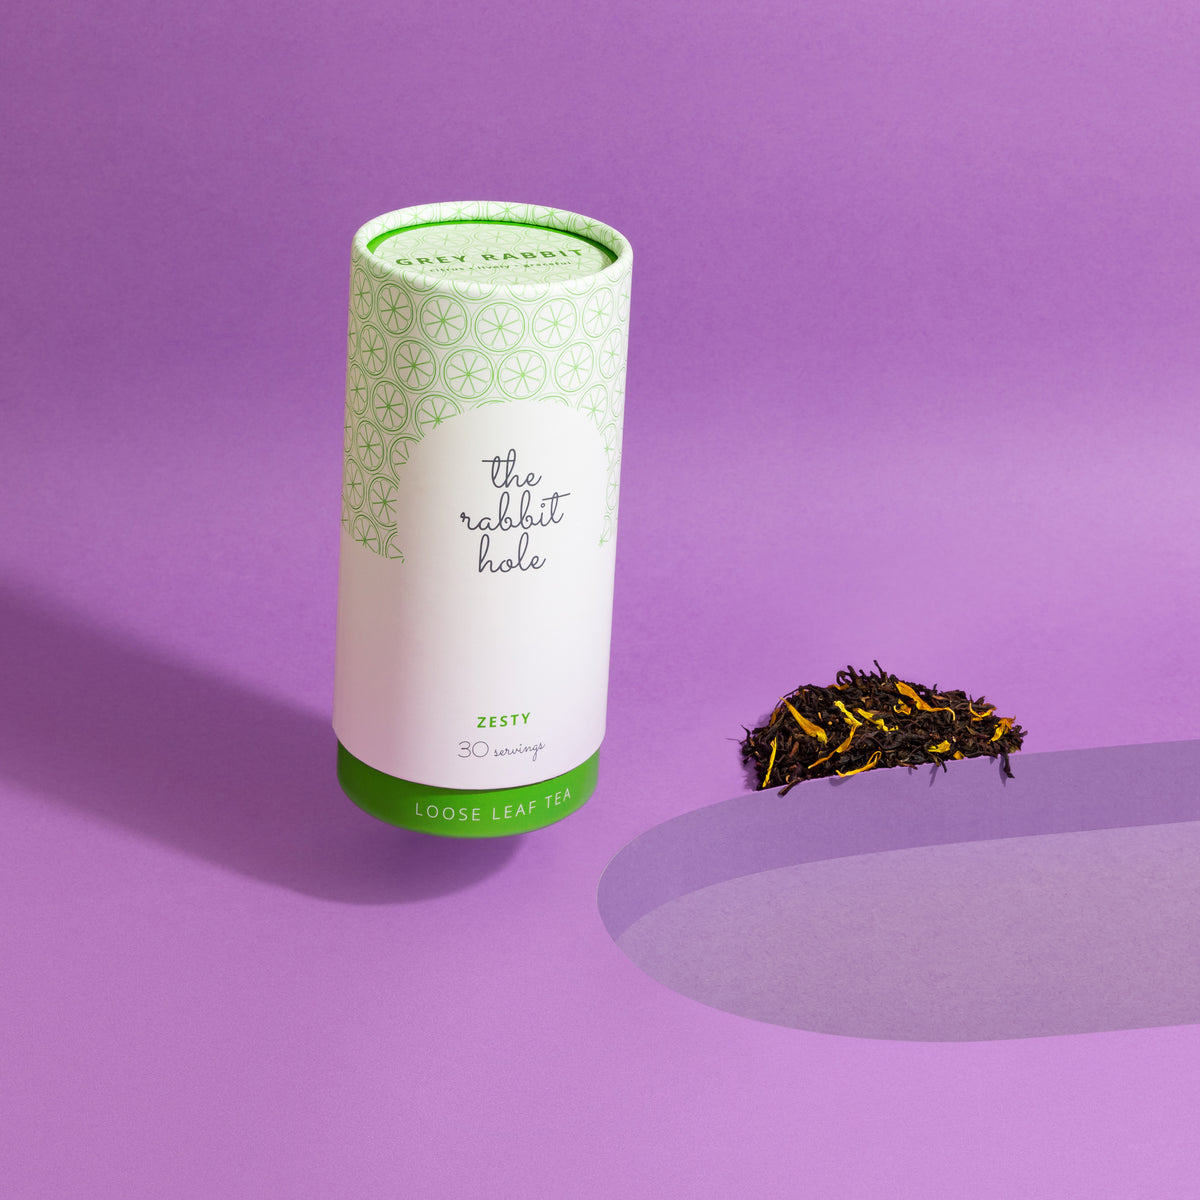 Grey Rabbit loose leaf tea by The Rabbit Hole - Australian Made Tea. Tea canister on colourful purple background